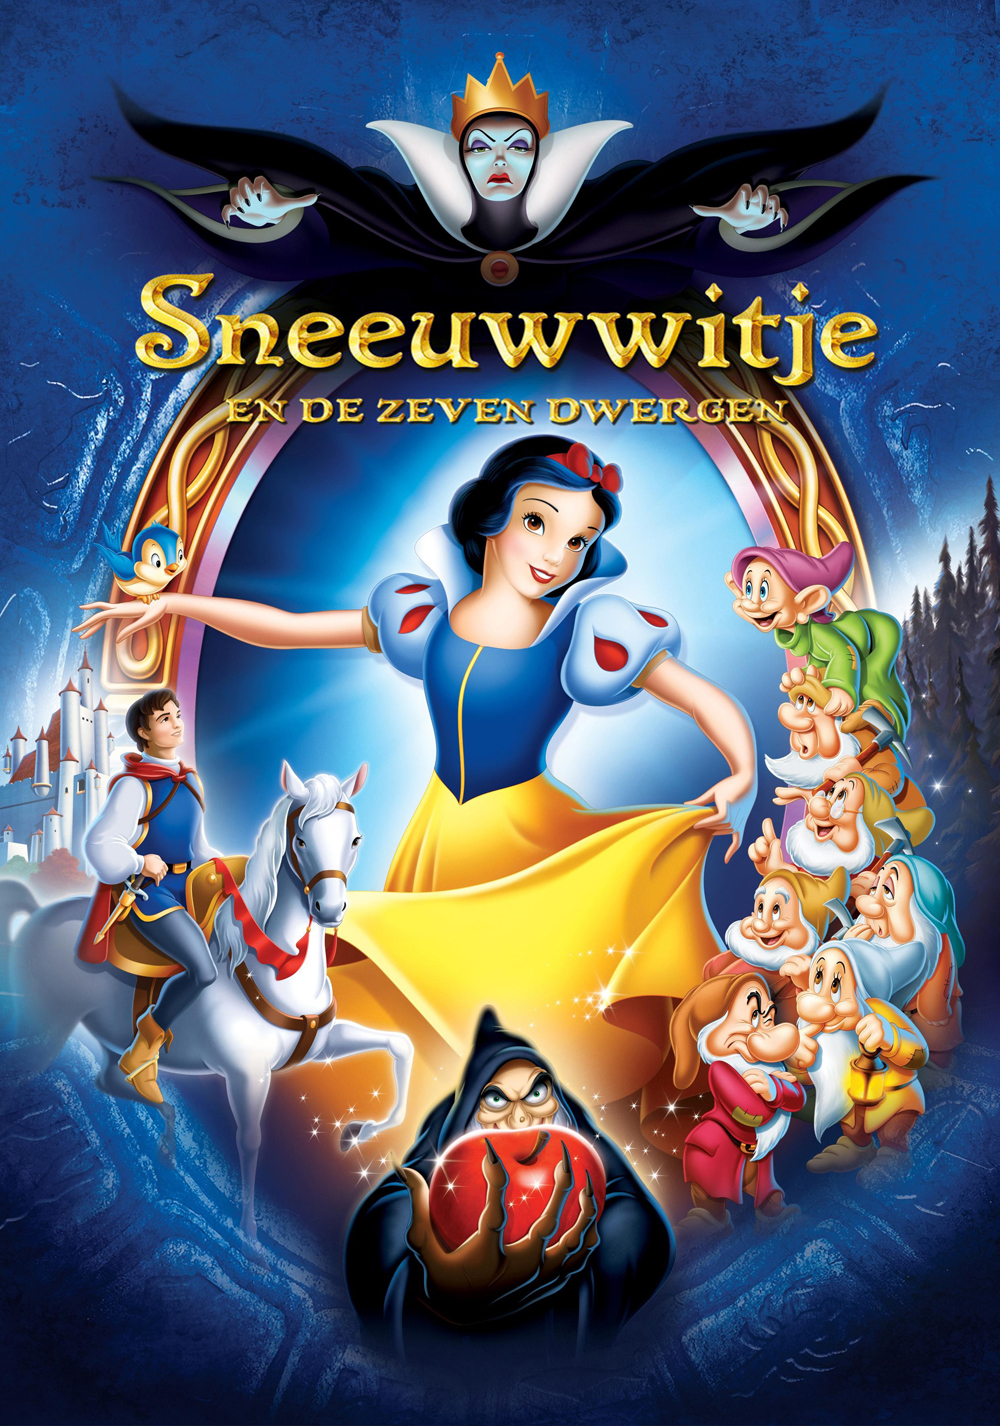 Snow White and the Seven Dwarfs Art